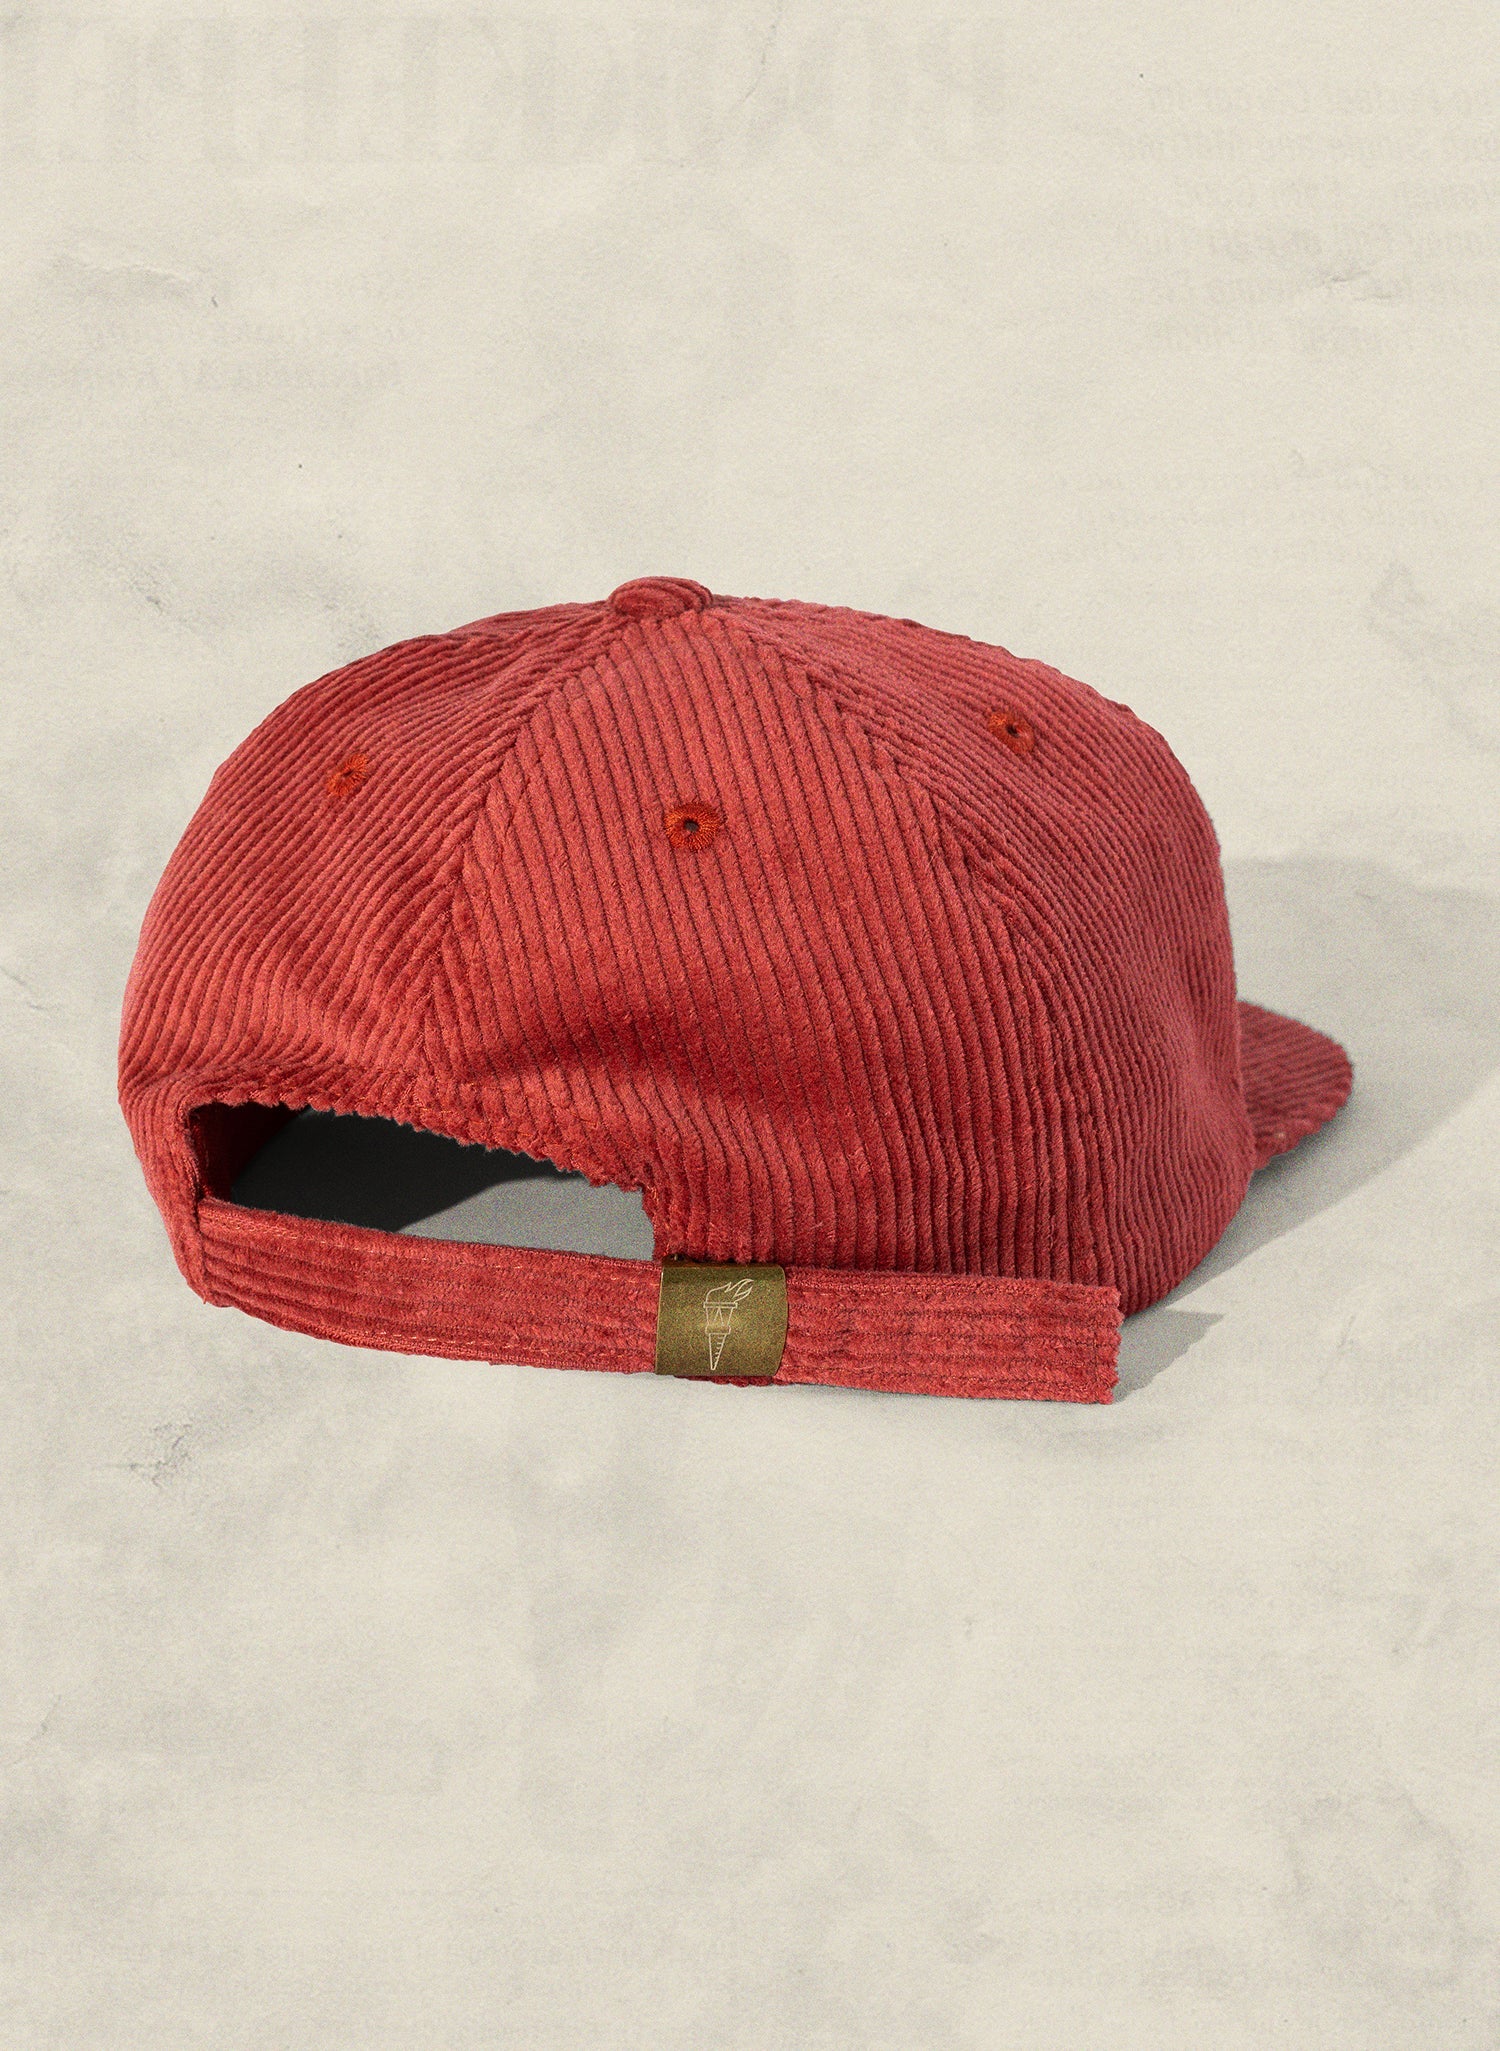 Weld Mfg Field Trip Hat - Unstructured 5 panel corduroy strapback hat, vintage inspired baseball hat, red